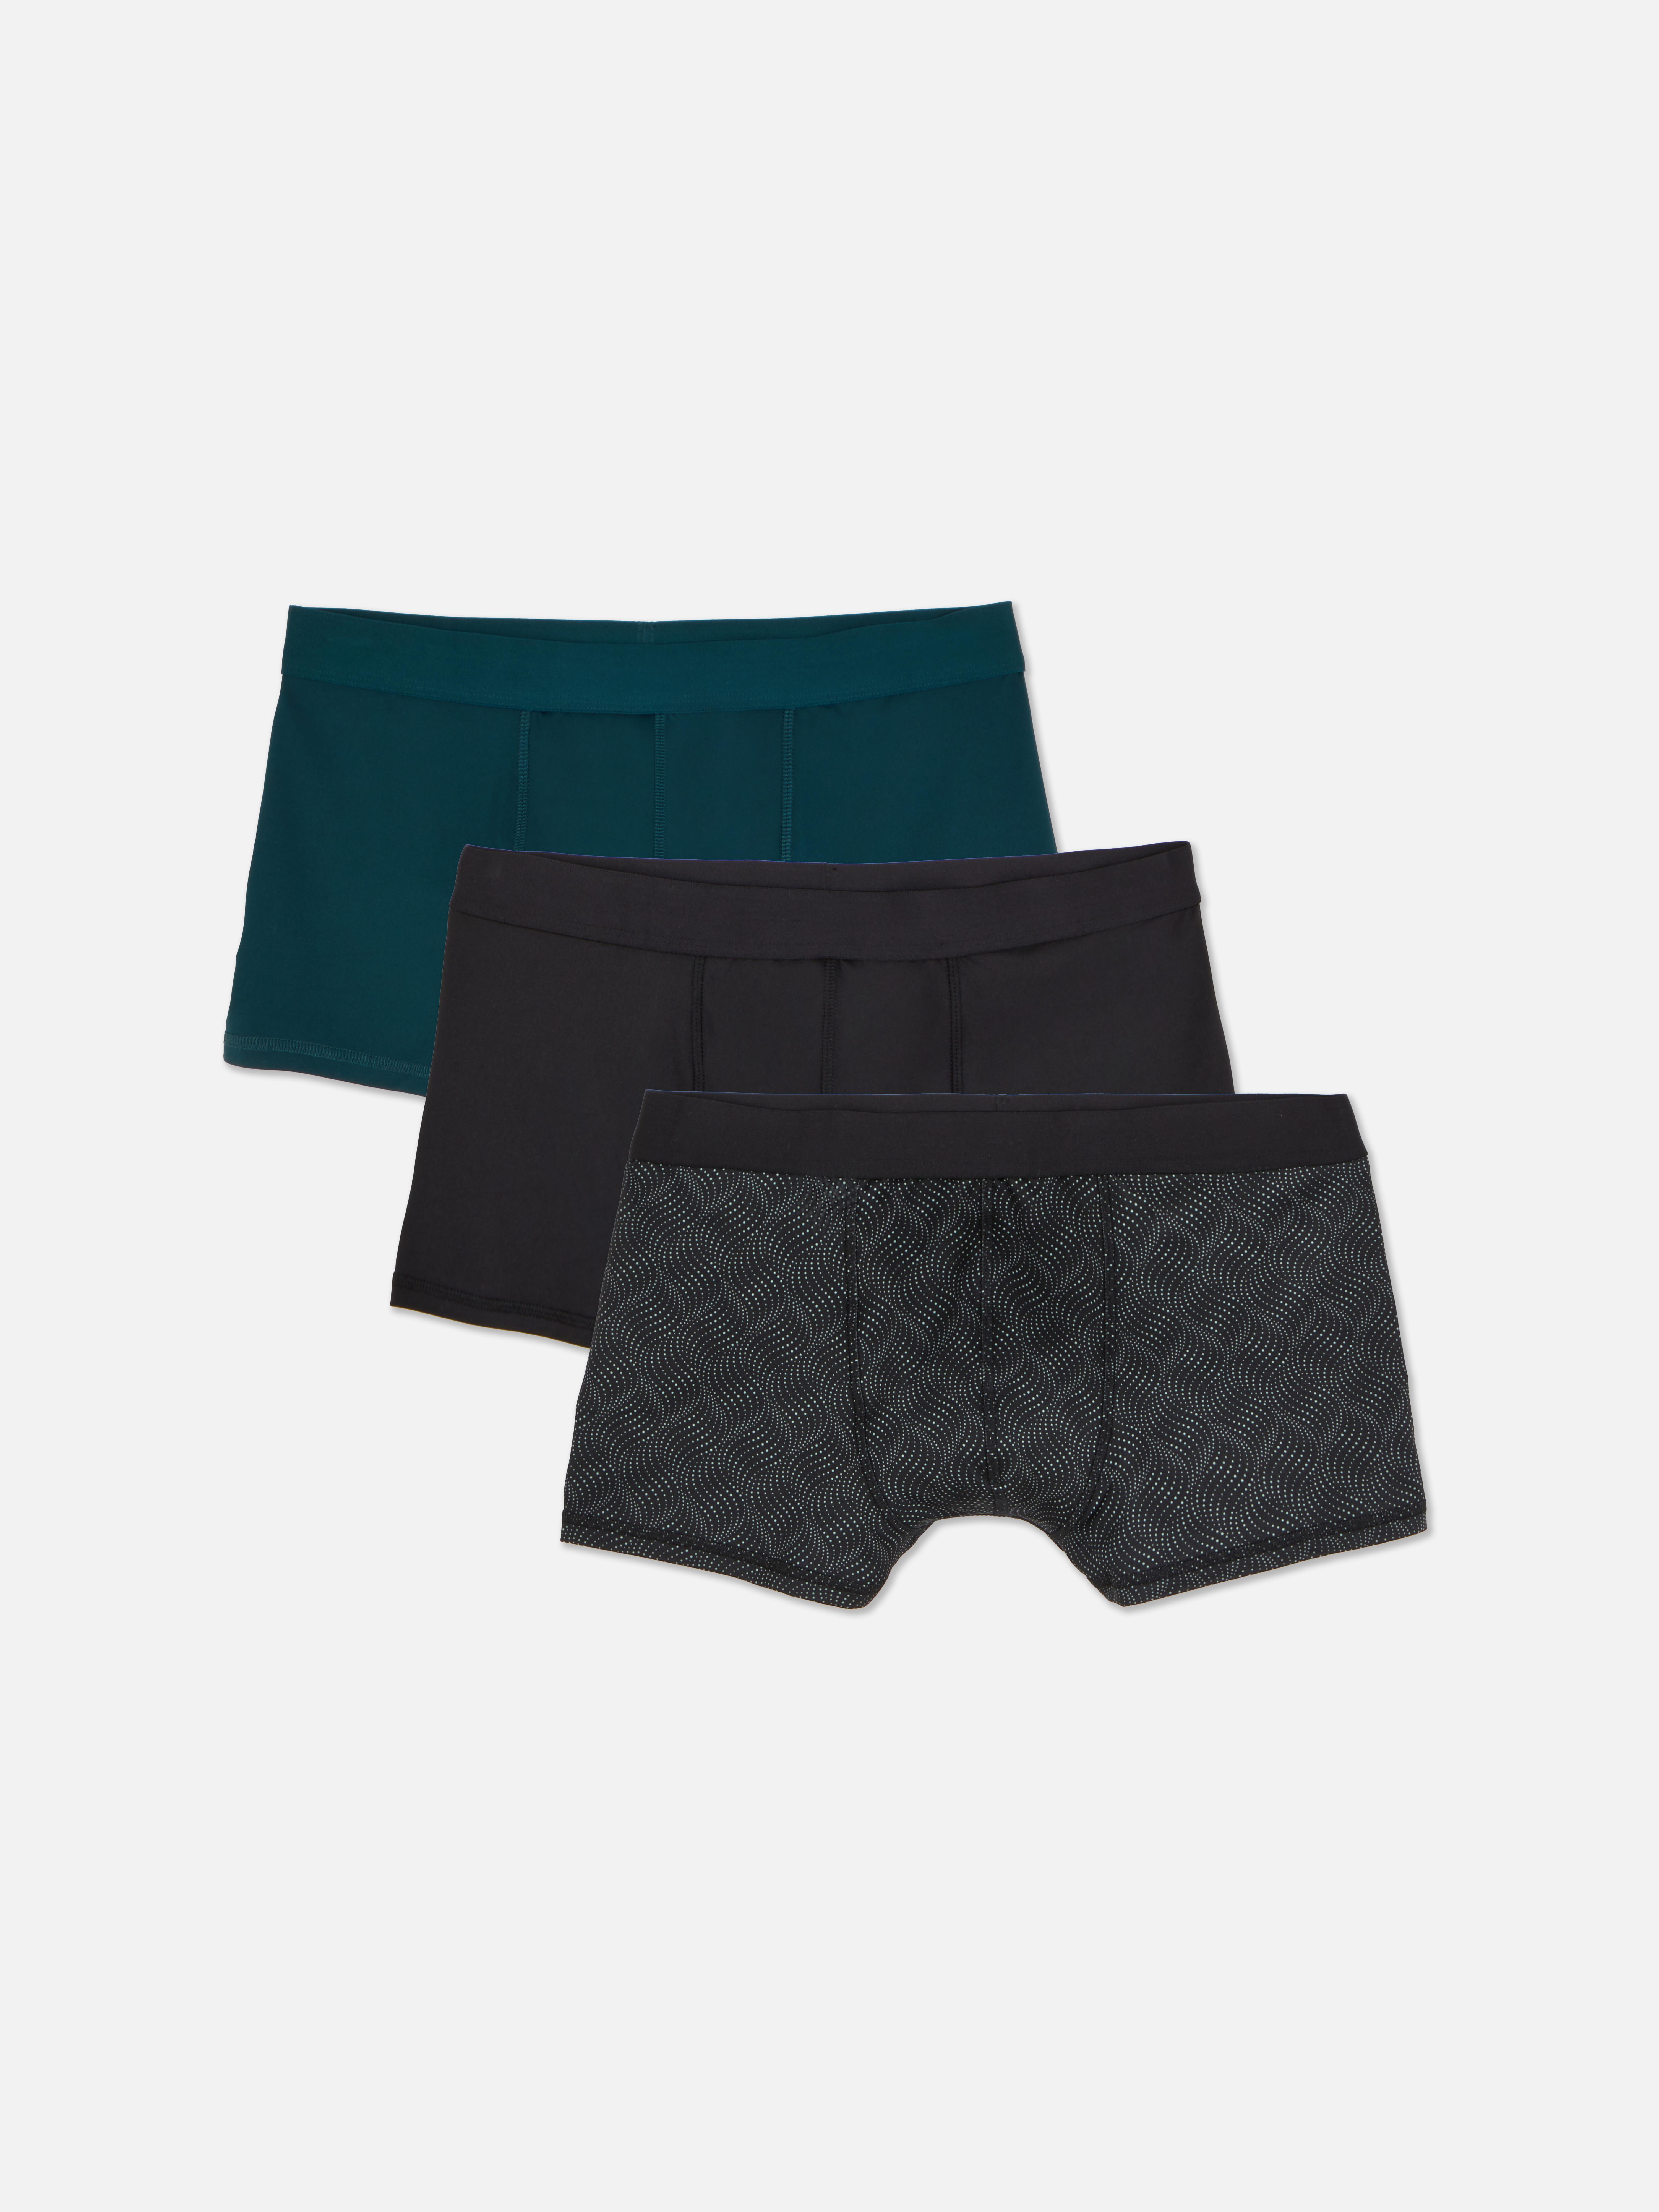 X Box Pants 2 Pack Primark Mens Underwear XBox Hipster UK Sizes S - XXL